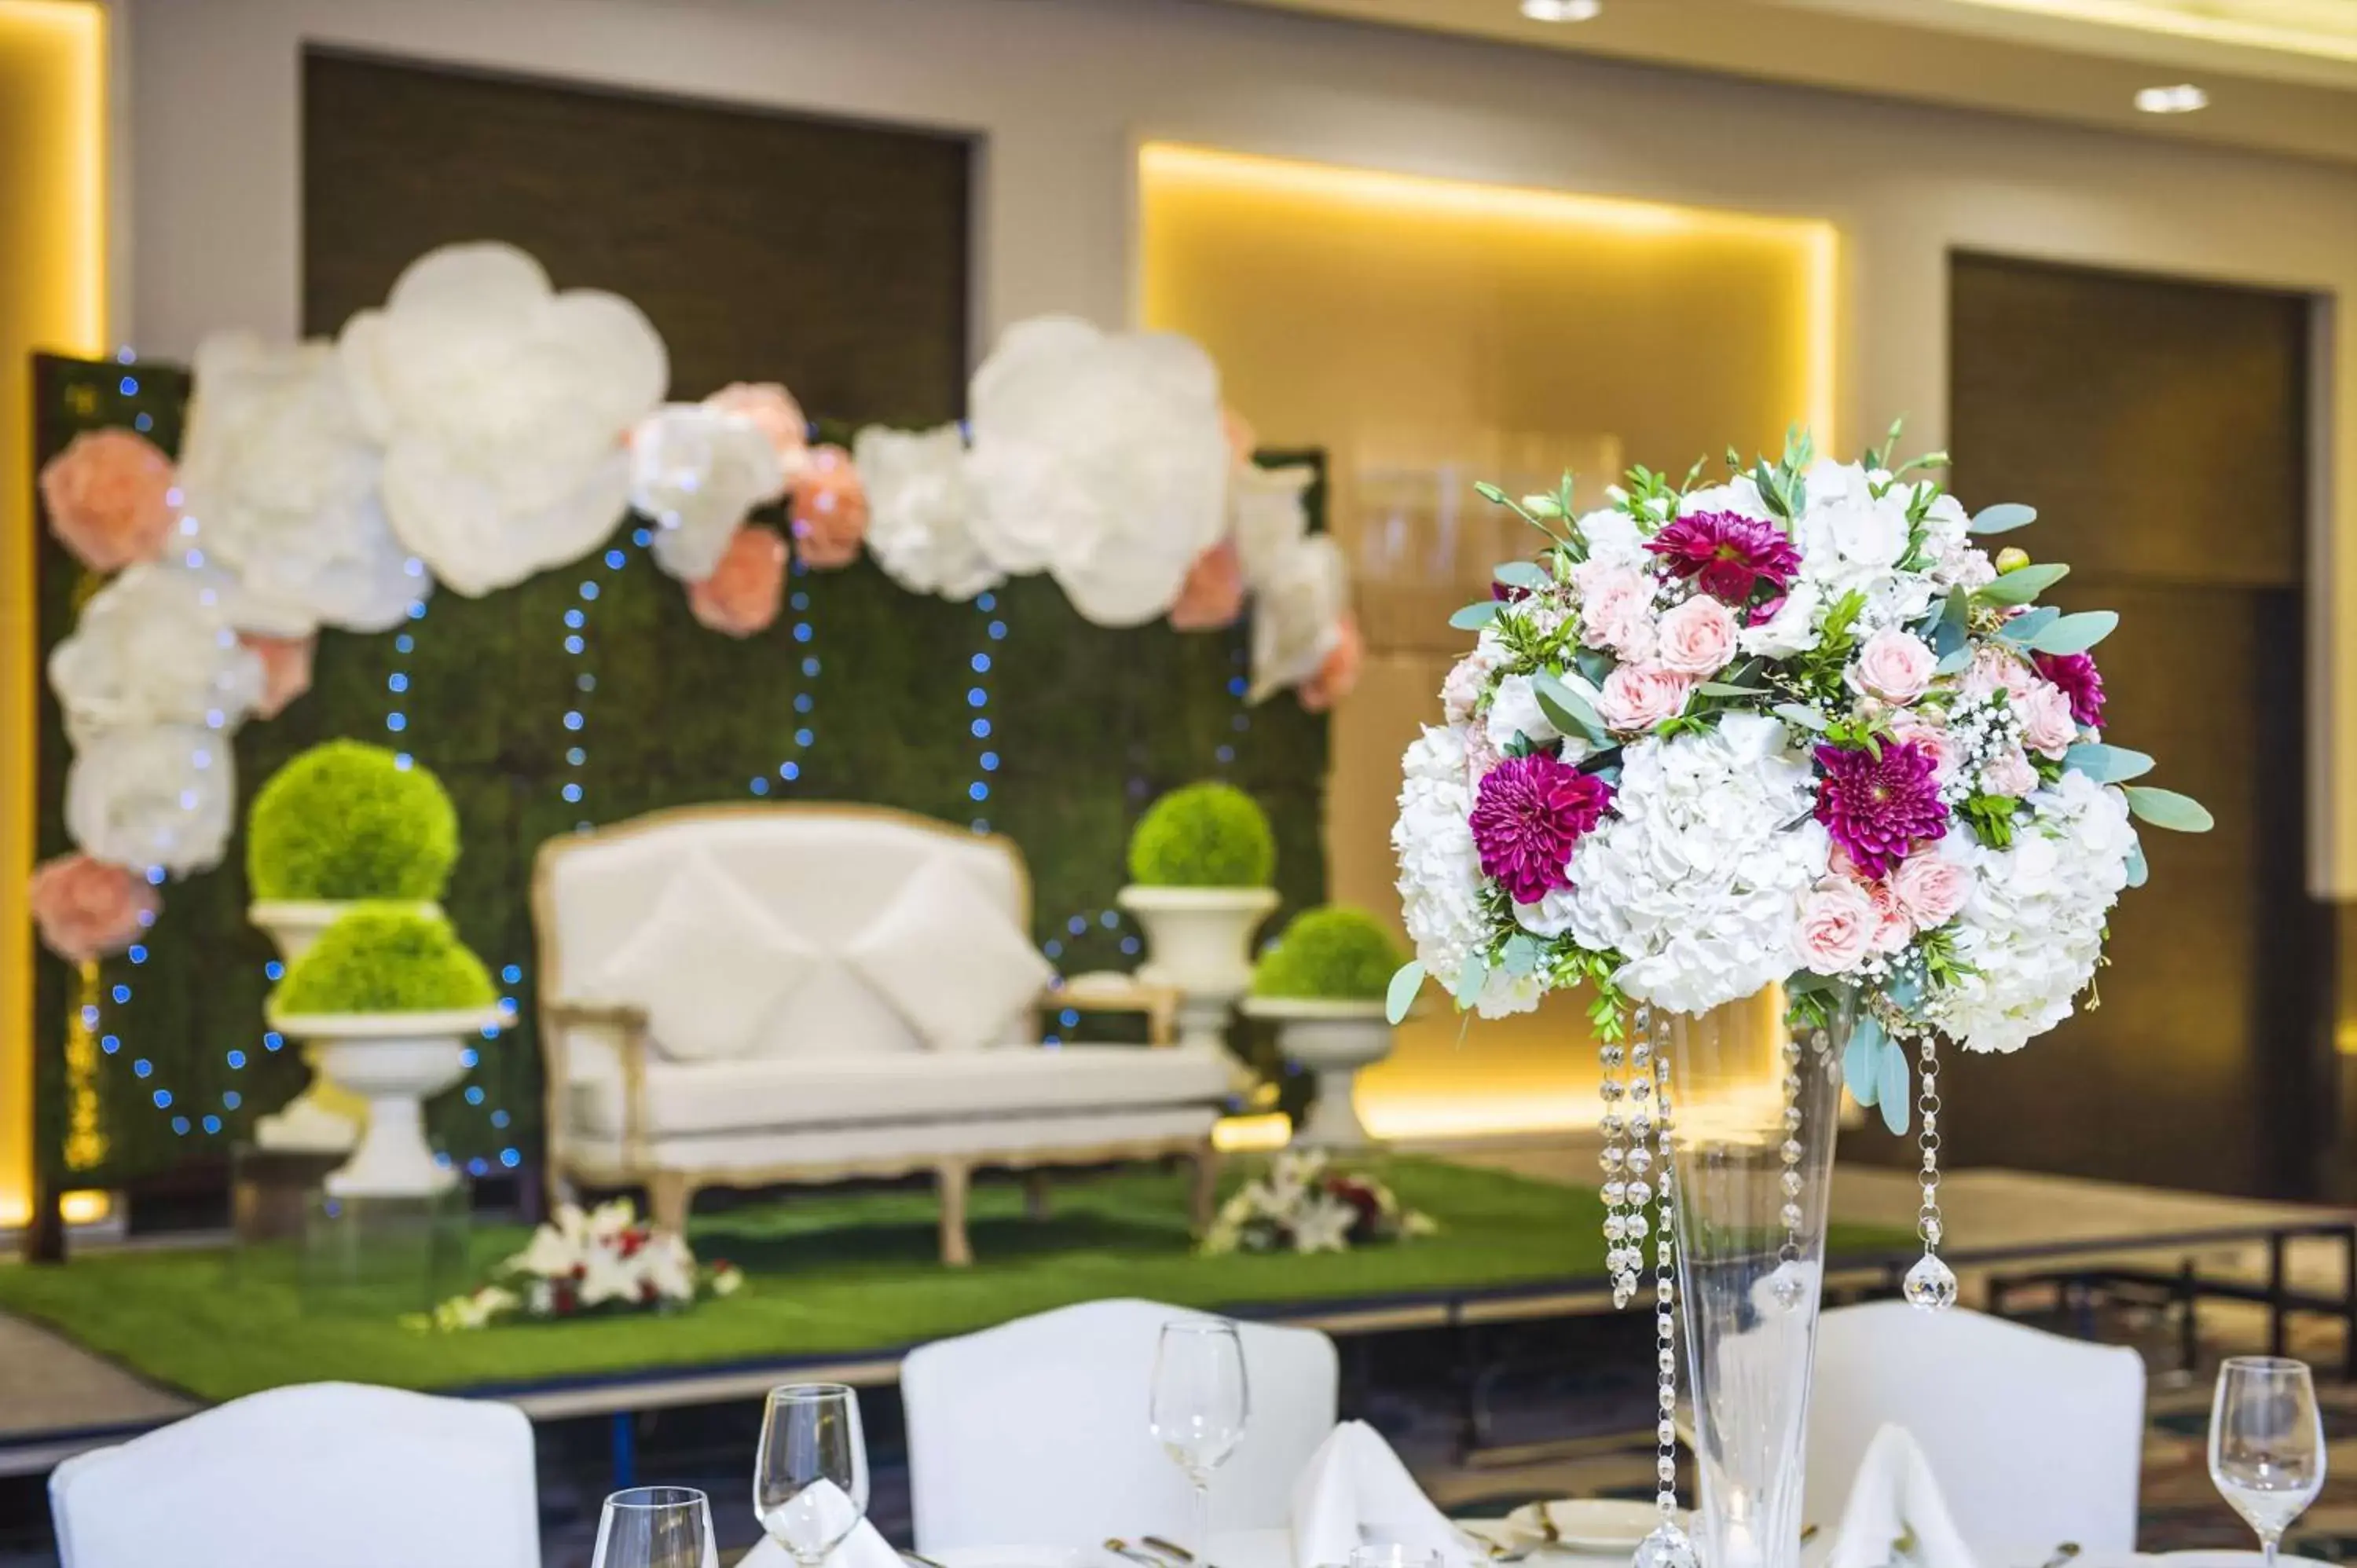 Meeting/conference room, Banquet Facilities in Hilton Garden Inn Ras Al Khaimah